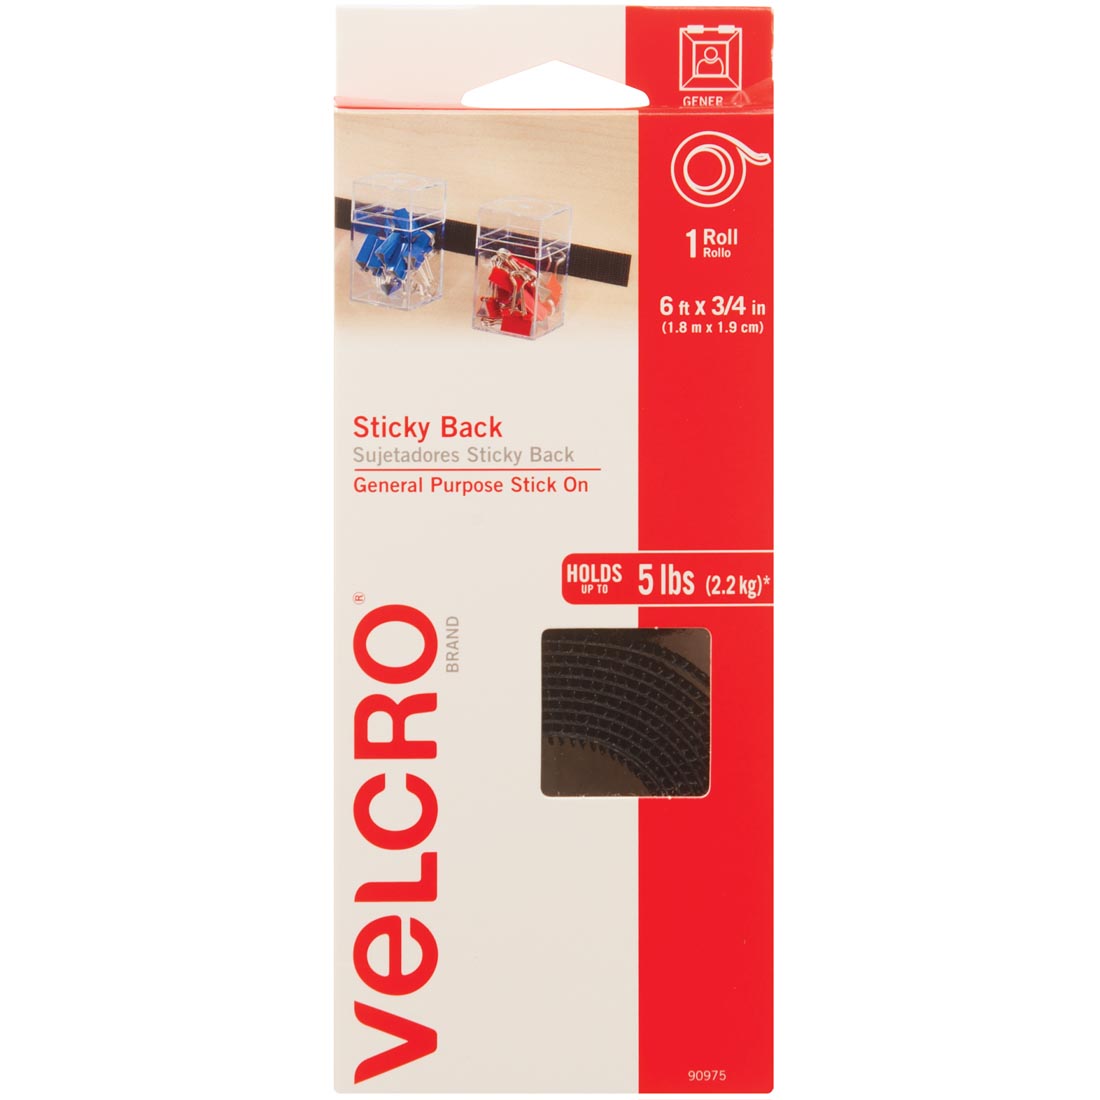 Package of VELCRO Brand Sticky Back Black Tape